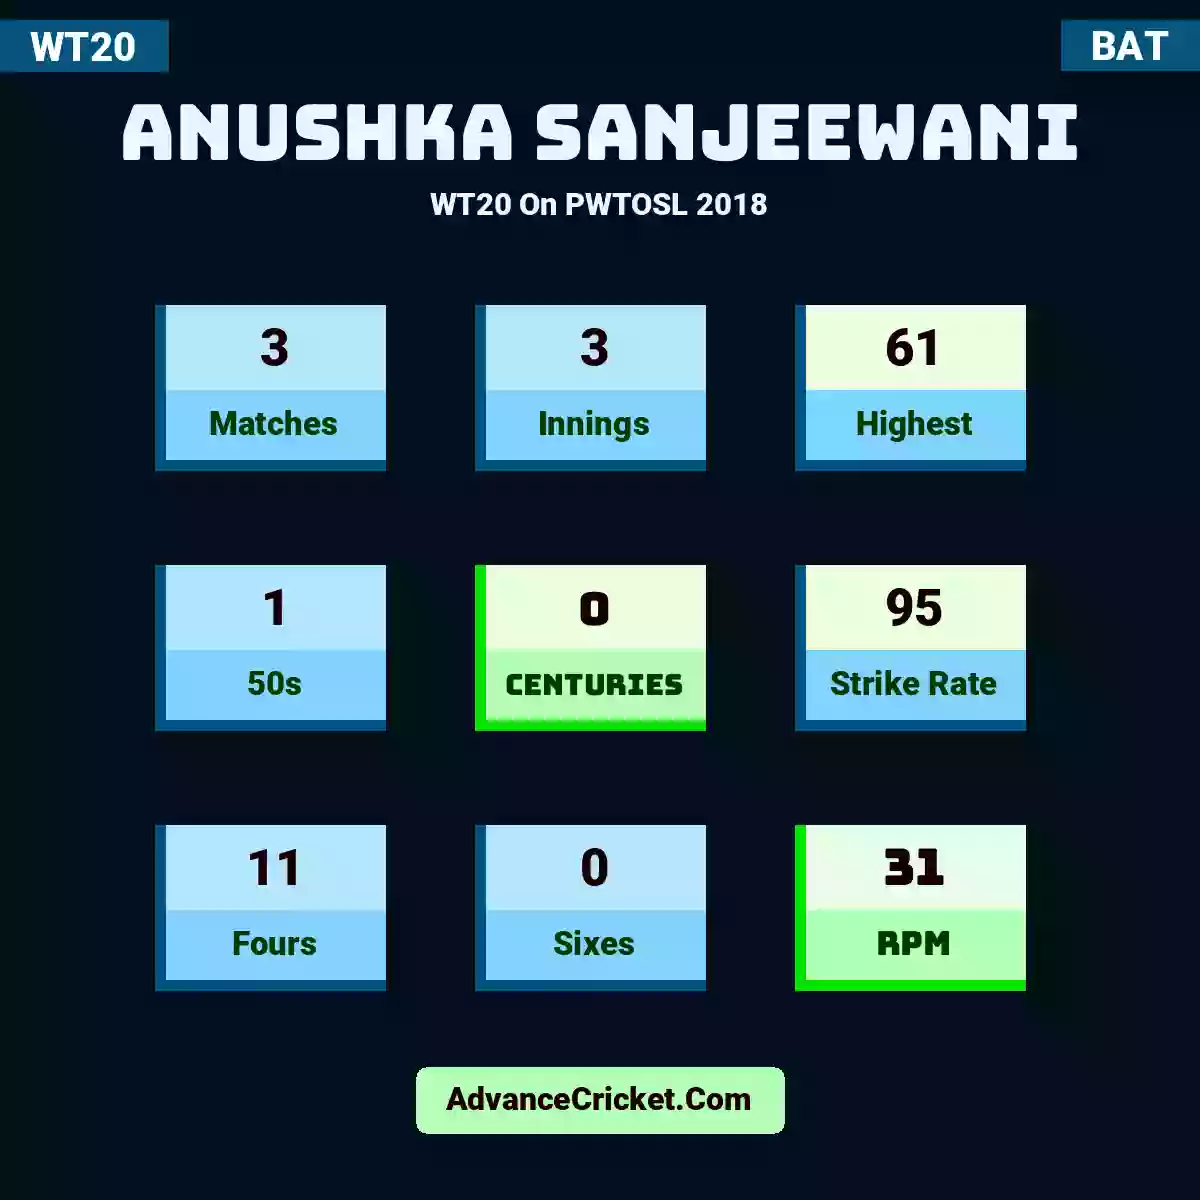 Anushka Sanjeewani WT20  On PWTOSL 2018, Anushka Sanjeewani played 3 matches, scored 61 runs as highest, 1 half-centuries, and 0 centuries, with a strike rate of 95. A.Sanjeewani hit 11 fours and 0 sixes, with an RPM of 31.